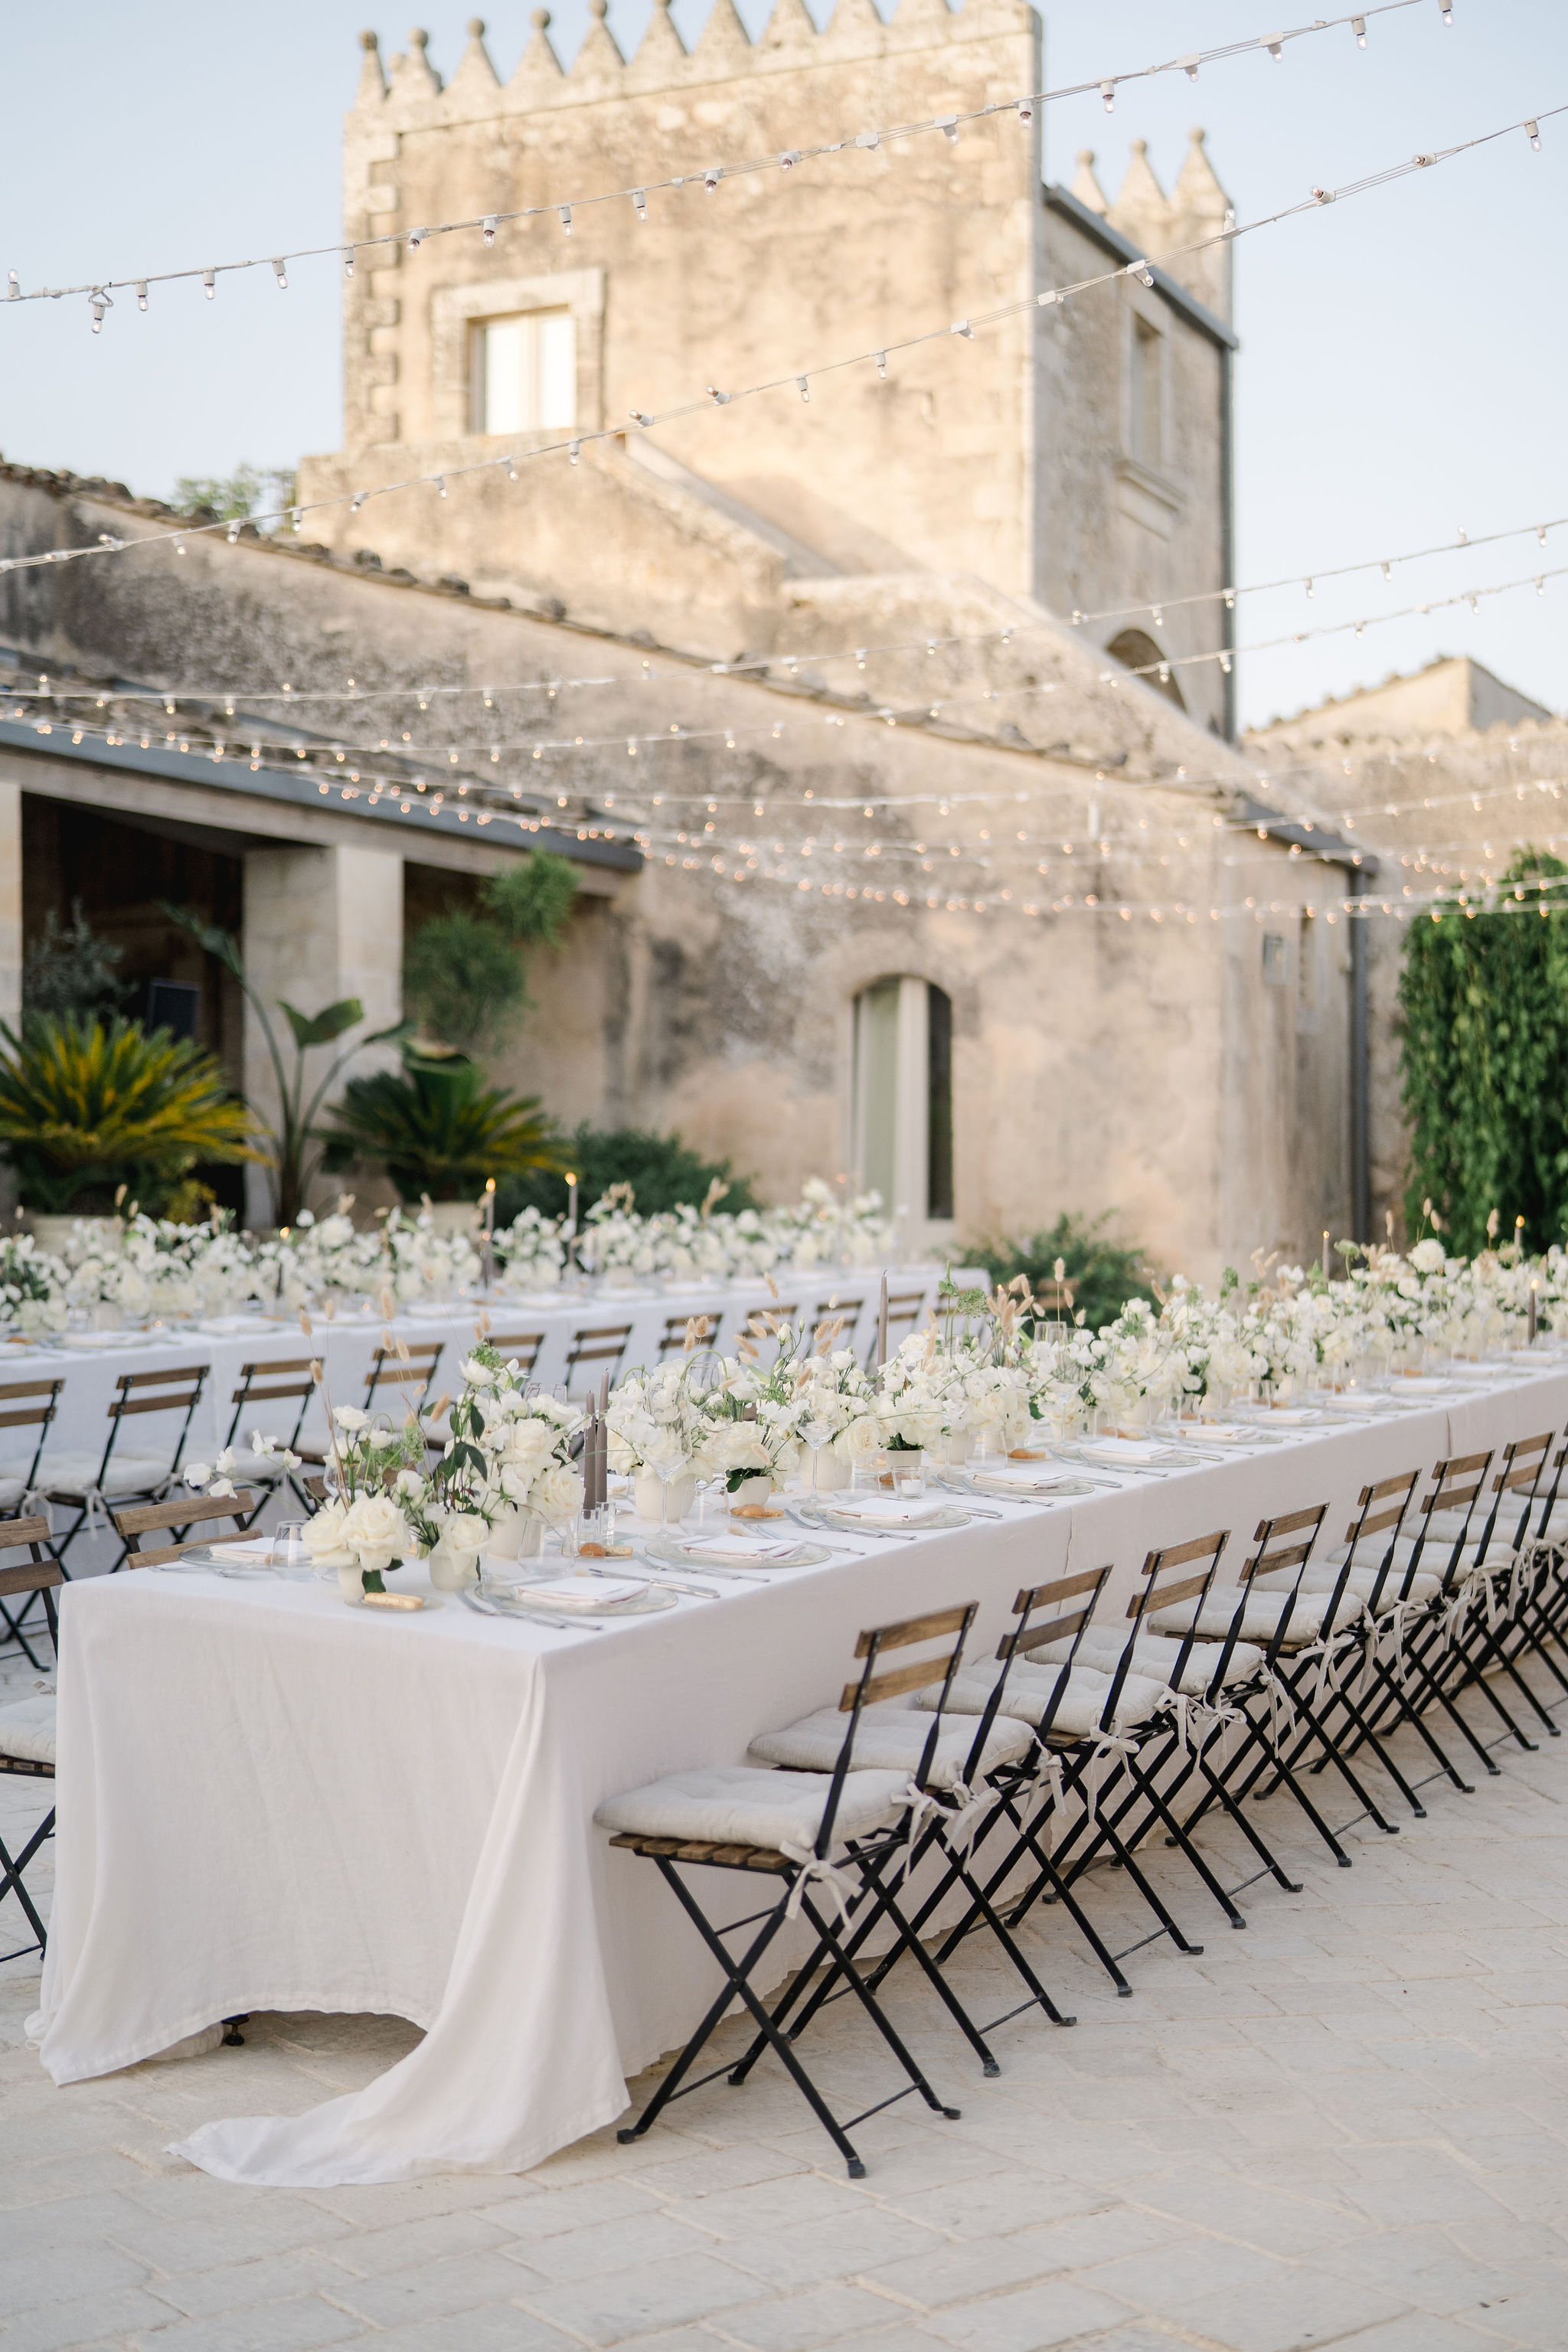 Dimora Delle Balze wedding venue, Sicily // Photo Credit Monika Leggio Wedding Photography